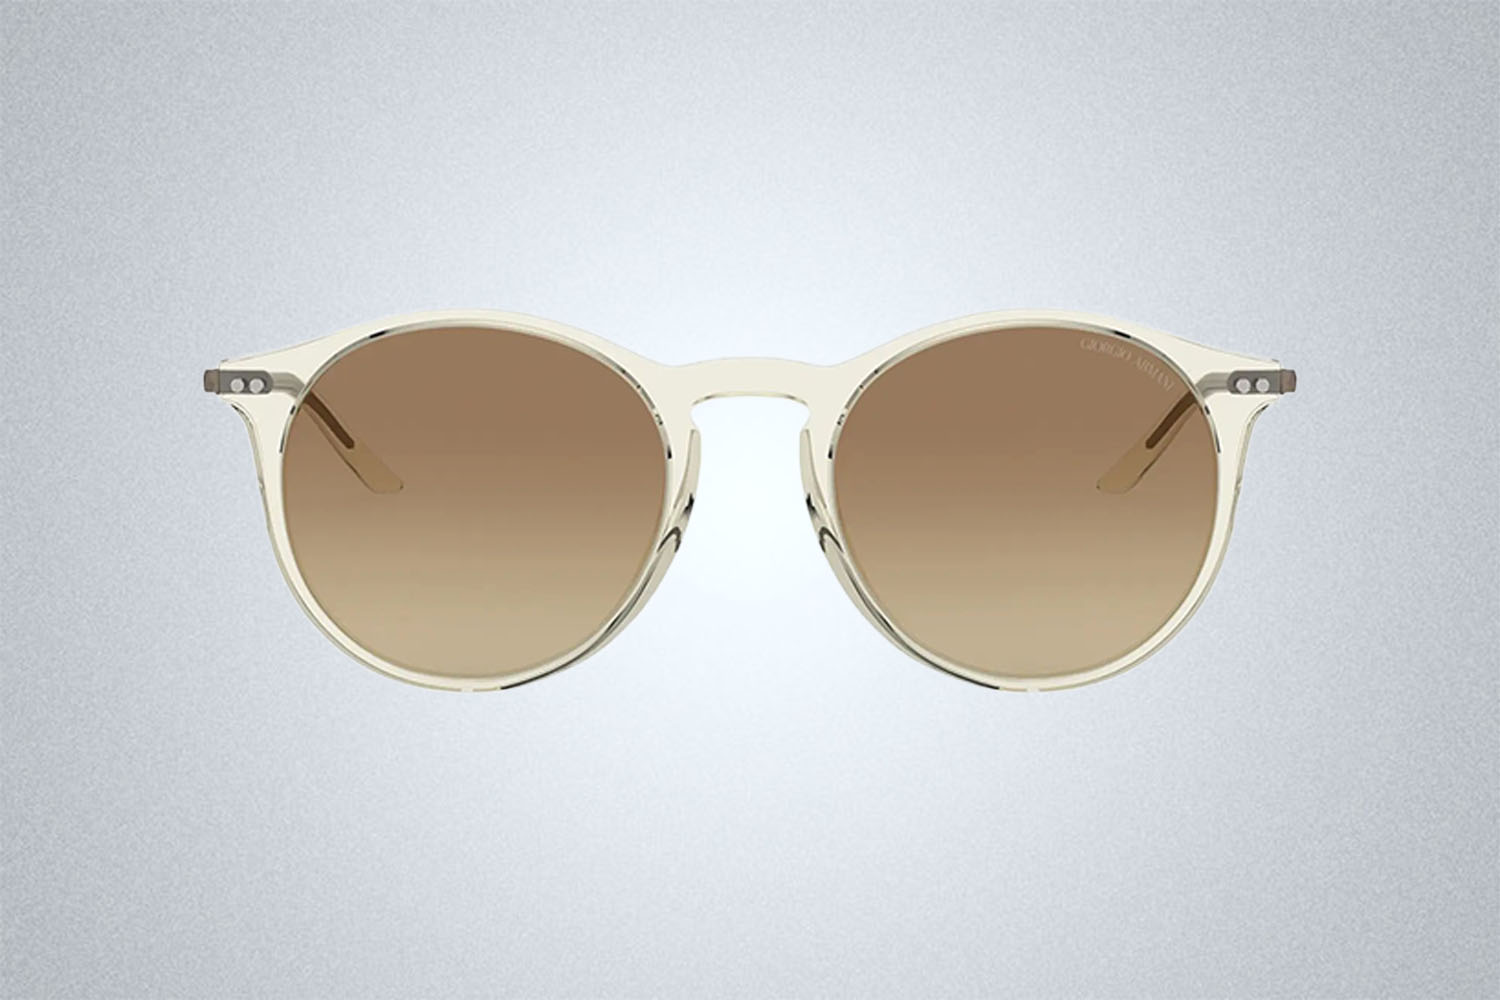 Giorgio Armani 51mm Gradient Phantos Sunglasses